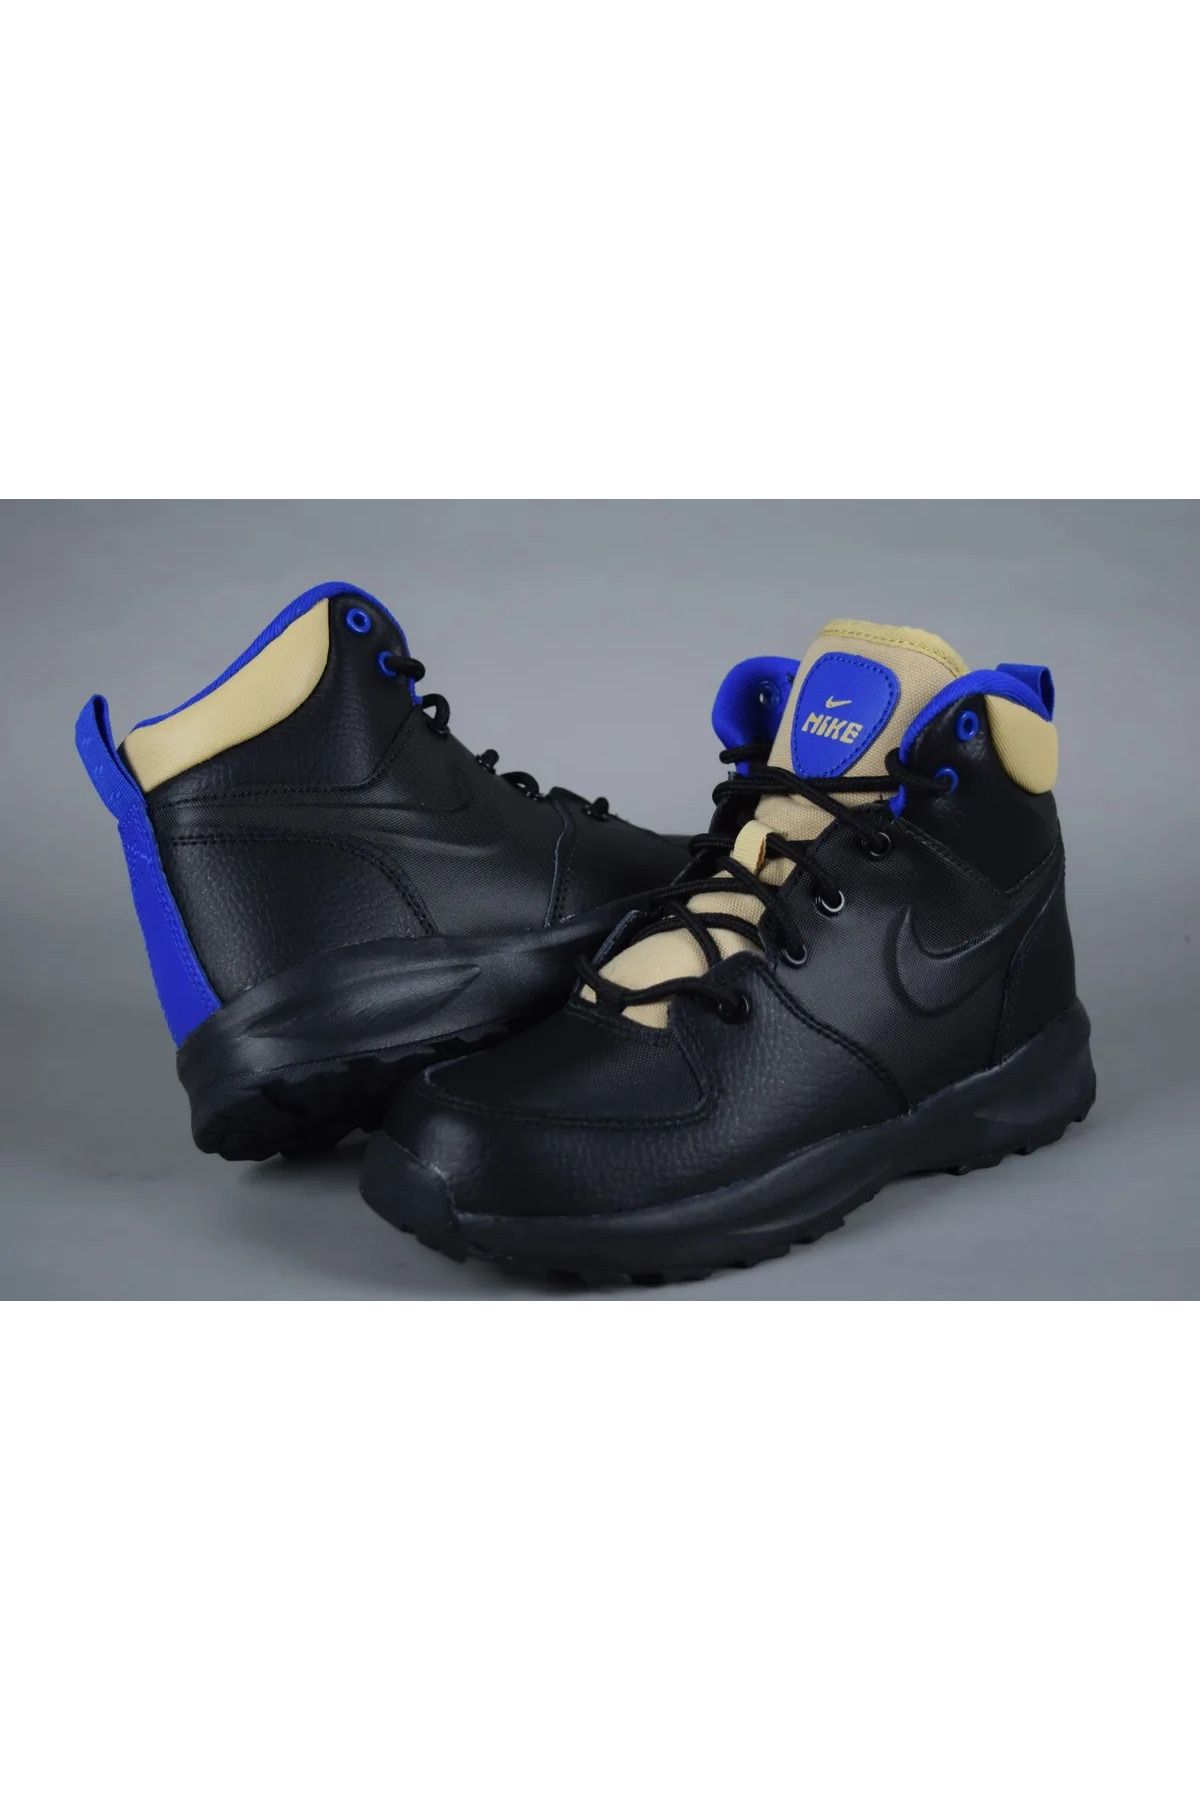 Nike - NIB! Little Kids Nike Manoa LTR PS Black Boots sz 2Y-3Y BQ5373 003 Blue Tan